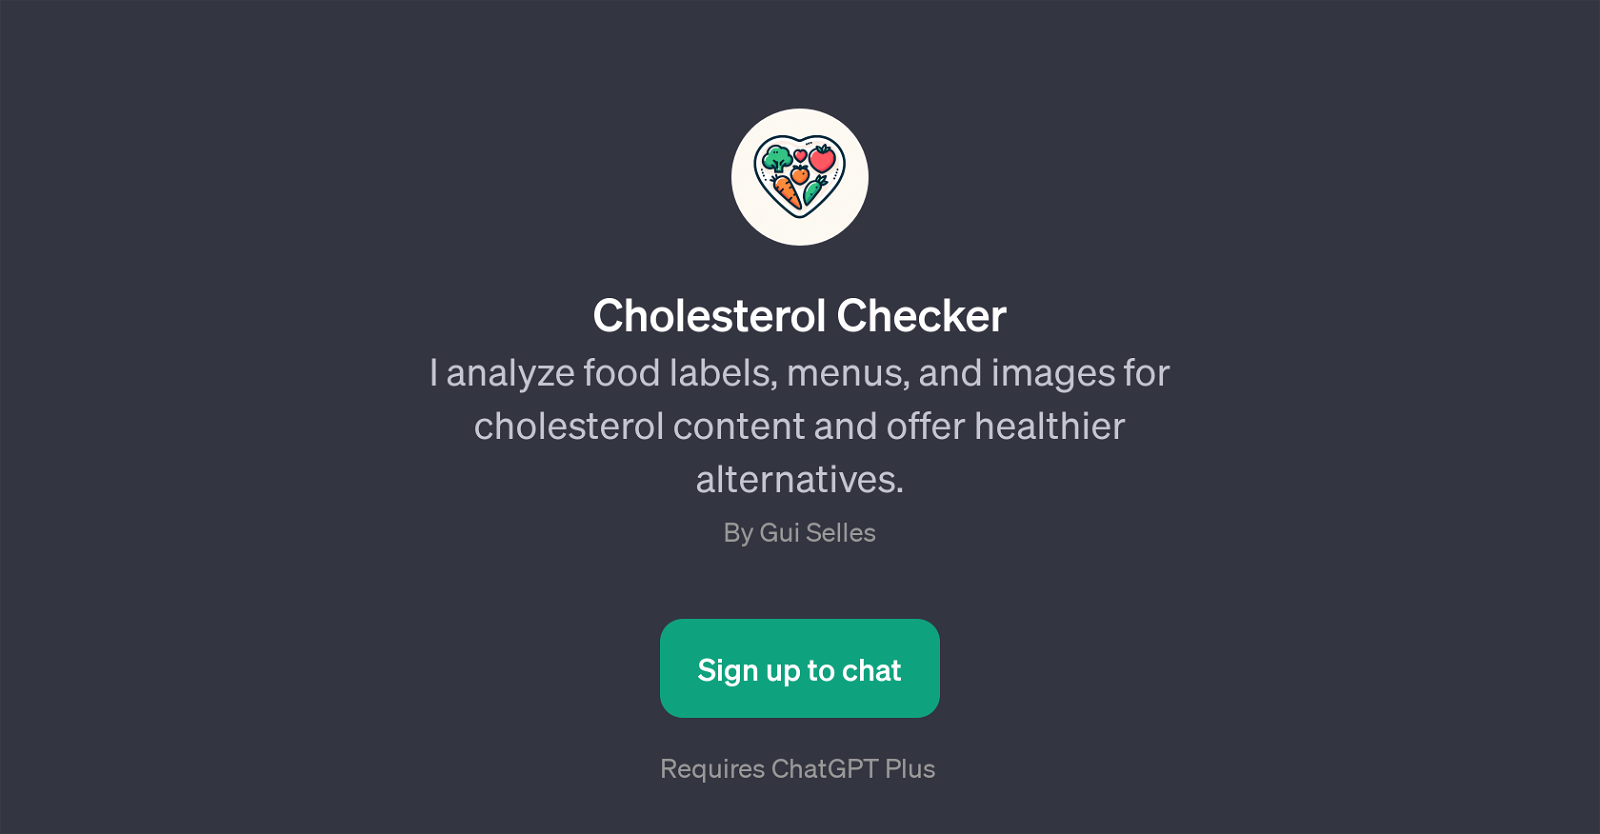 Cholesterol Checker website